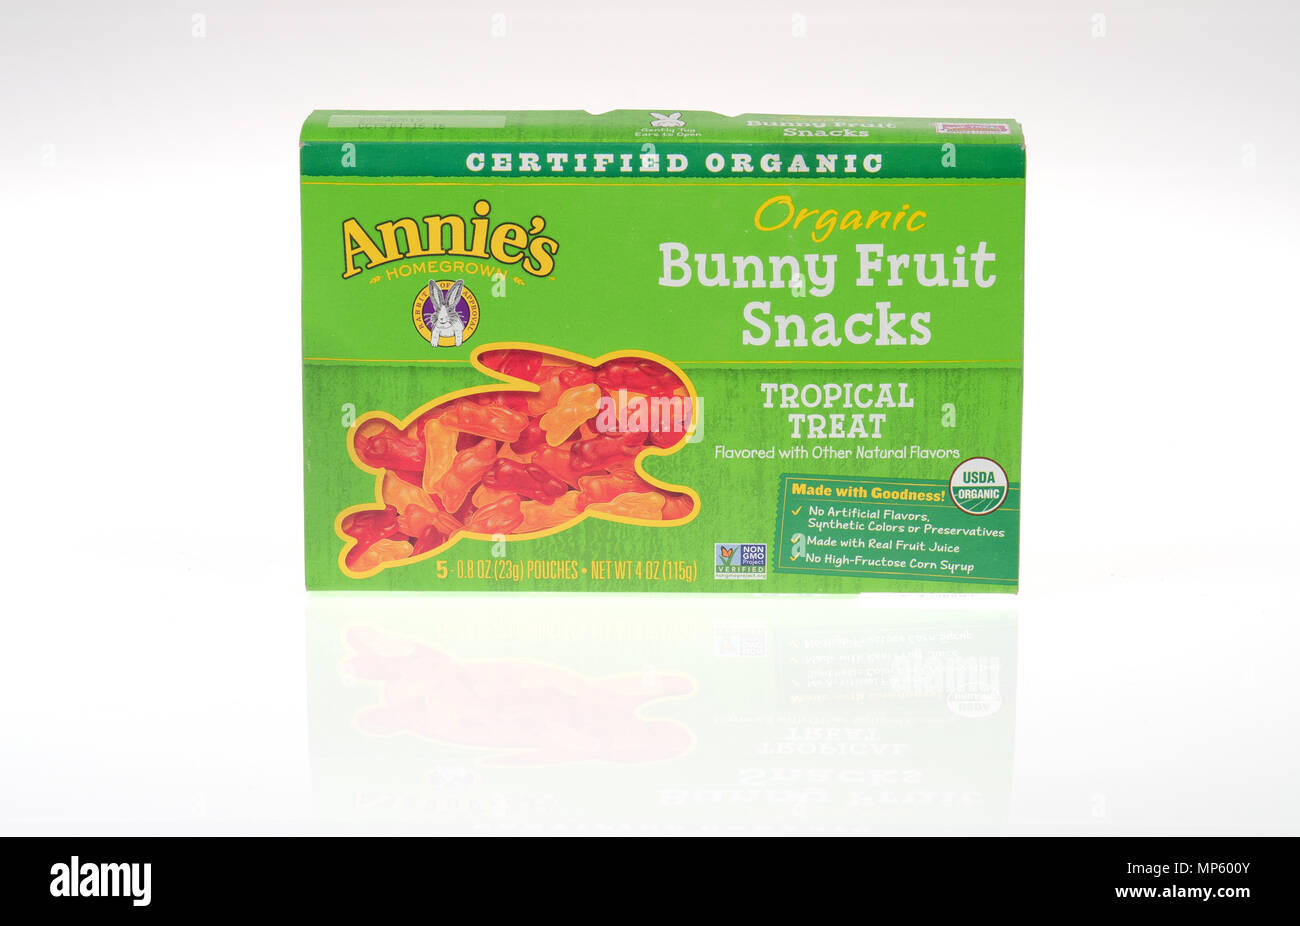 Box of Annie’s Organic Bunny Fruit Snacks on white background Stock Photo